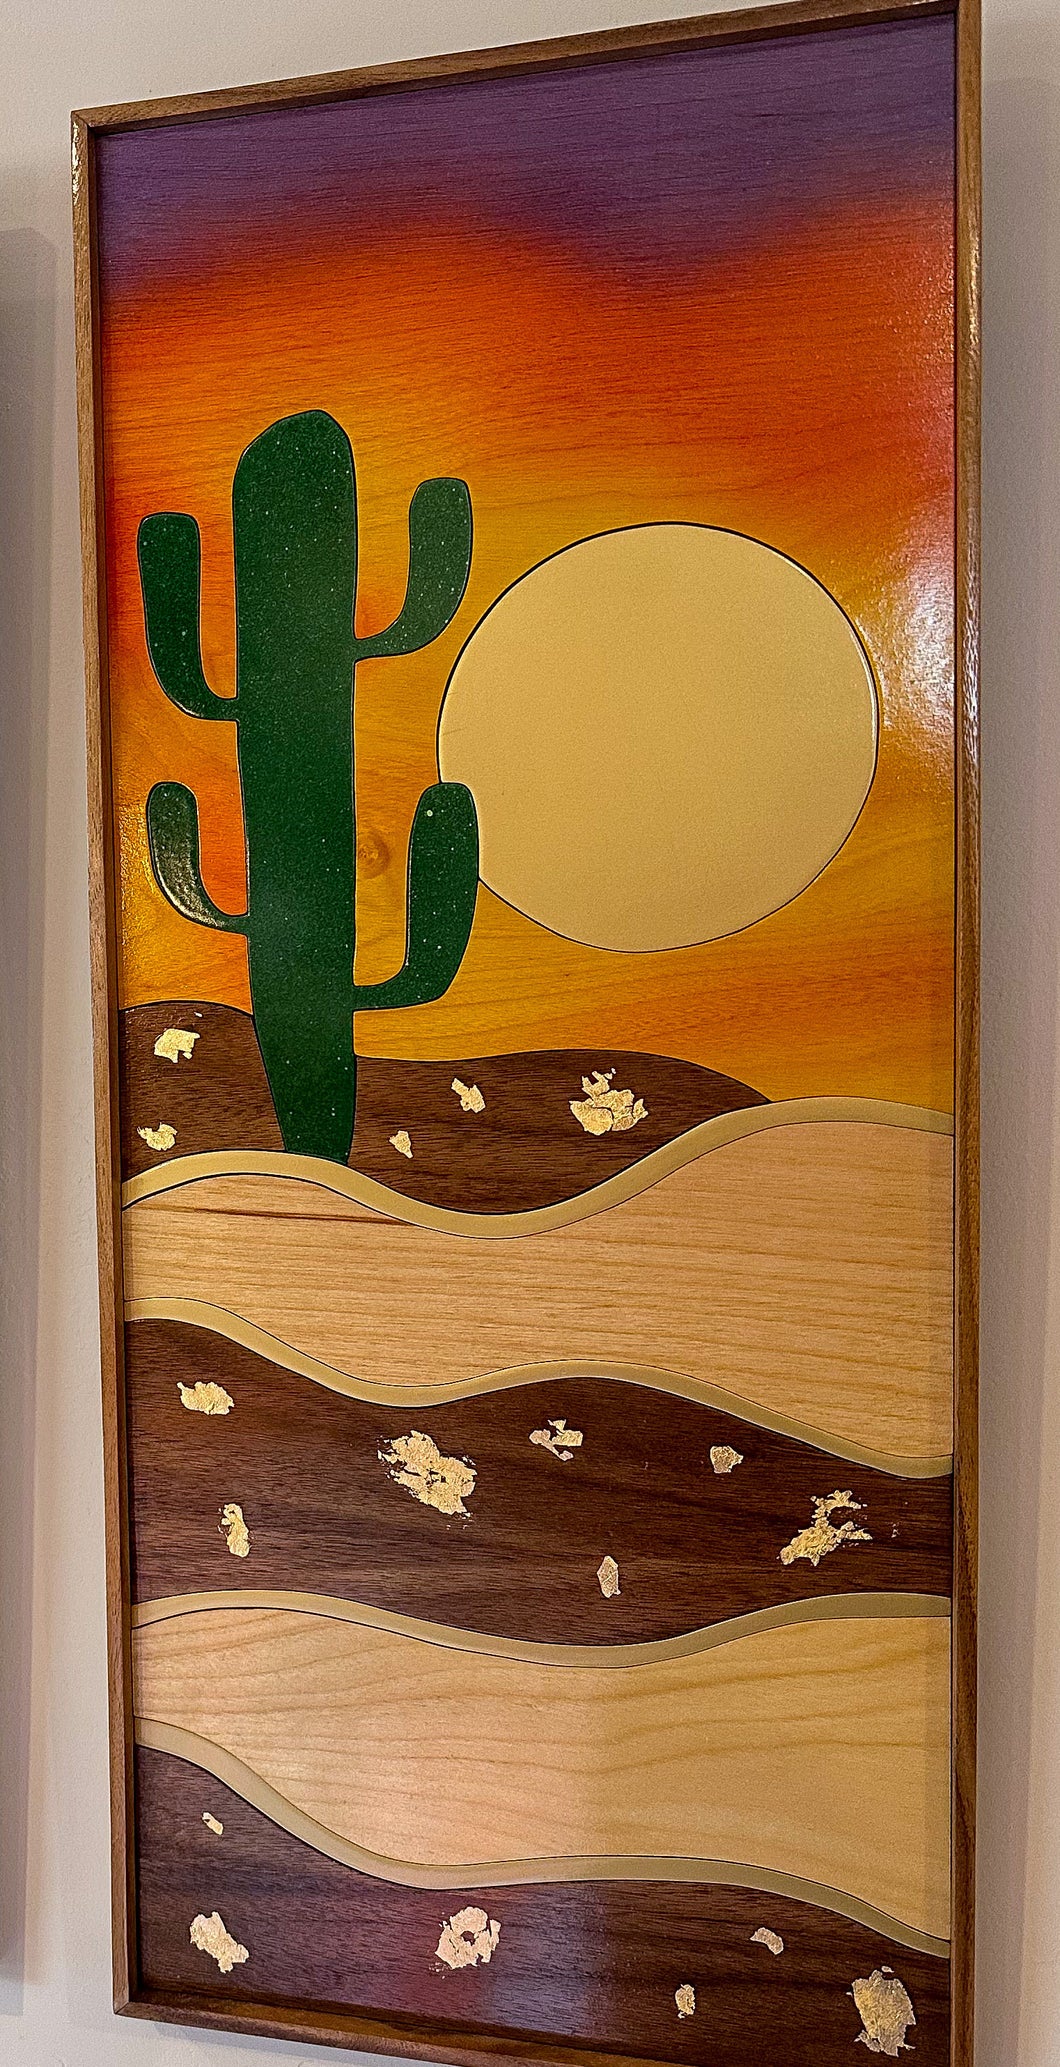 Cactus and Arroyos (Classic)